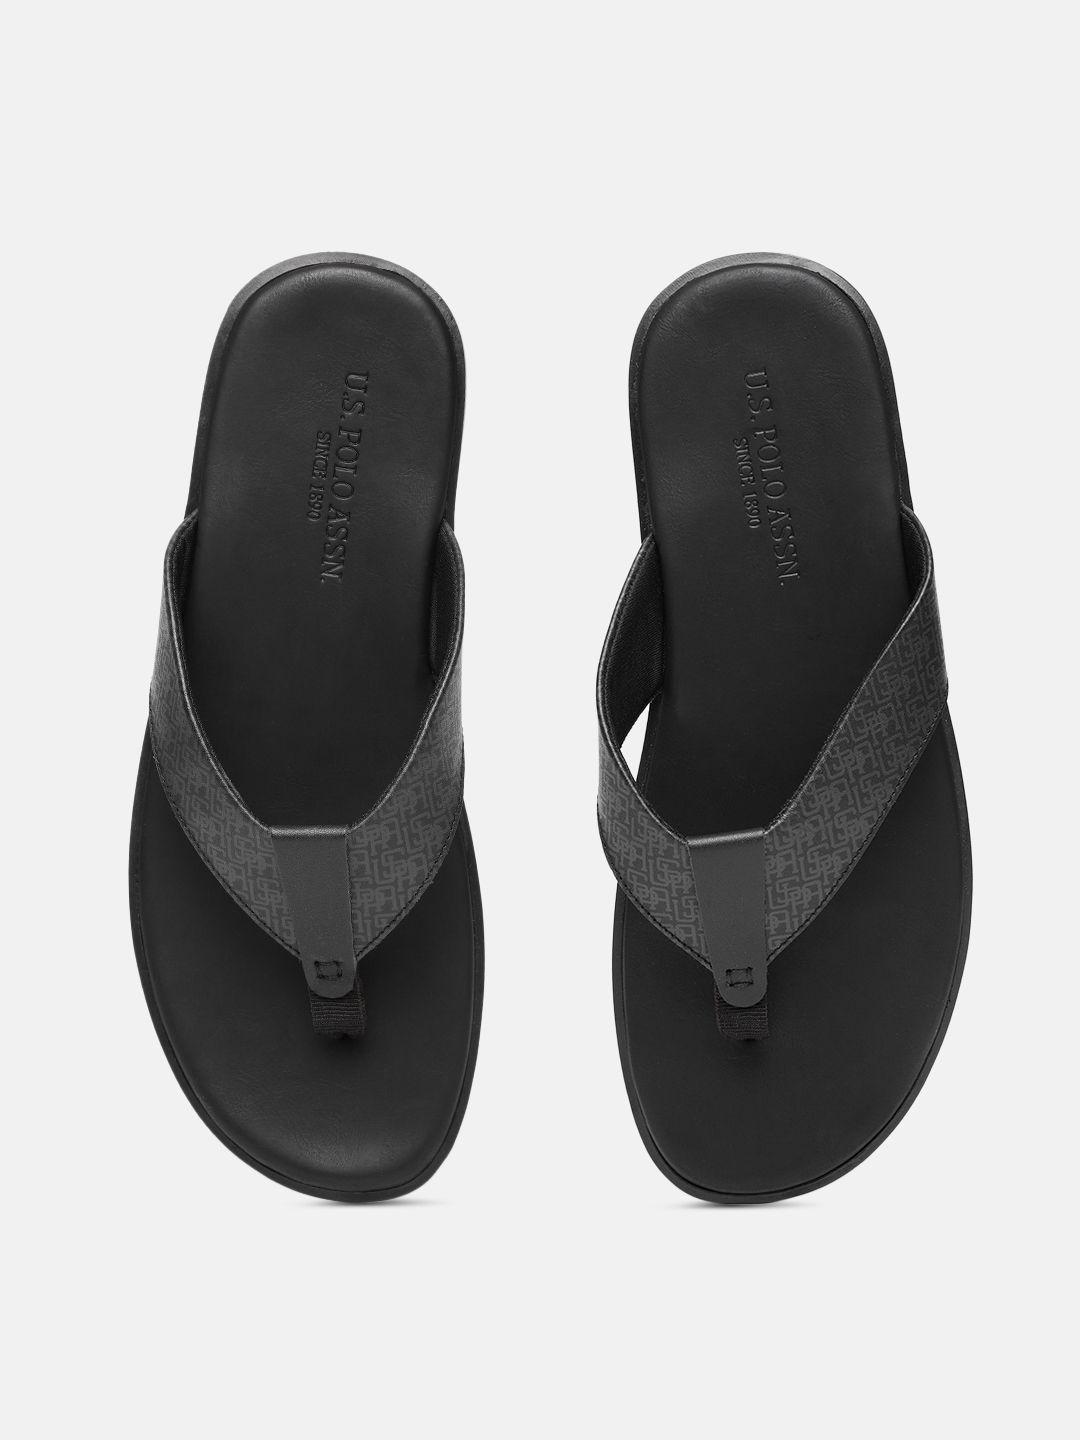 U.S. Polo Assn. Men Black Leather DONLACK 2.0 Comfort Sandals